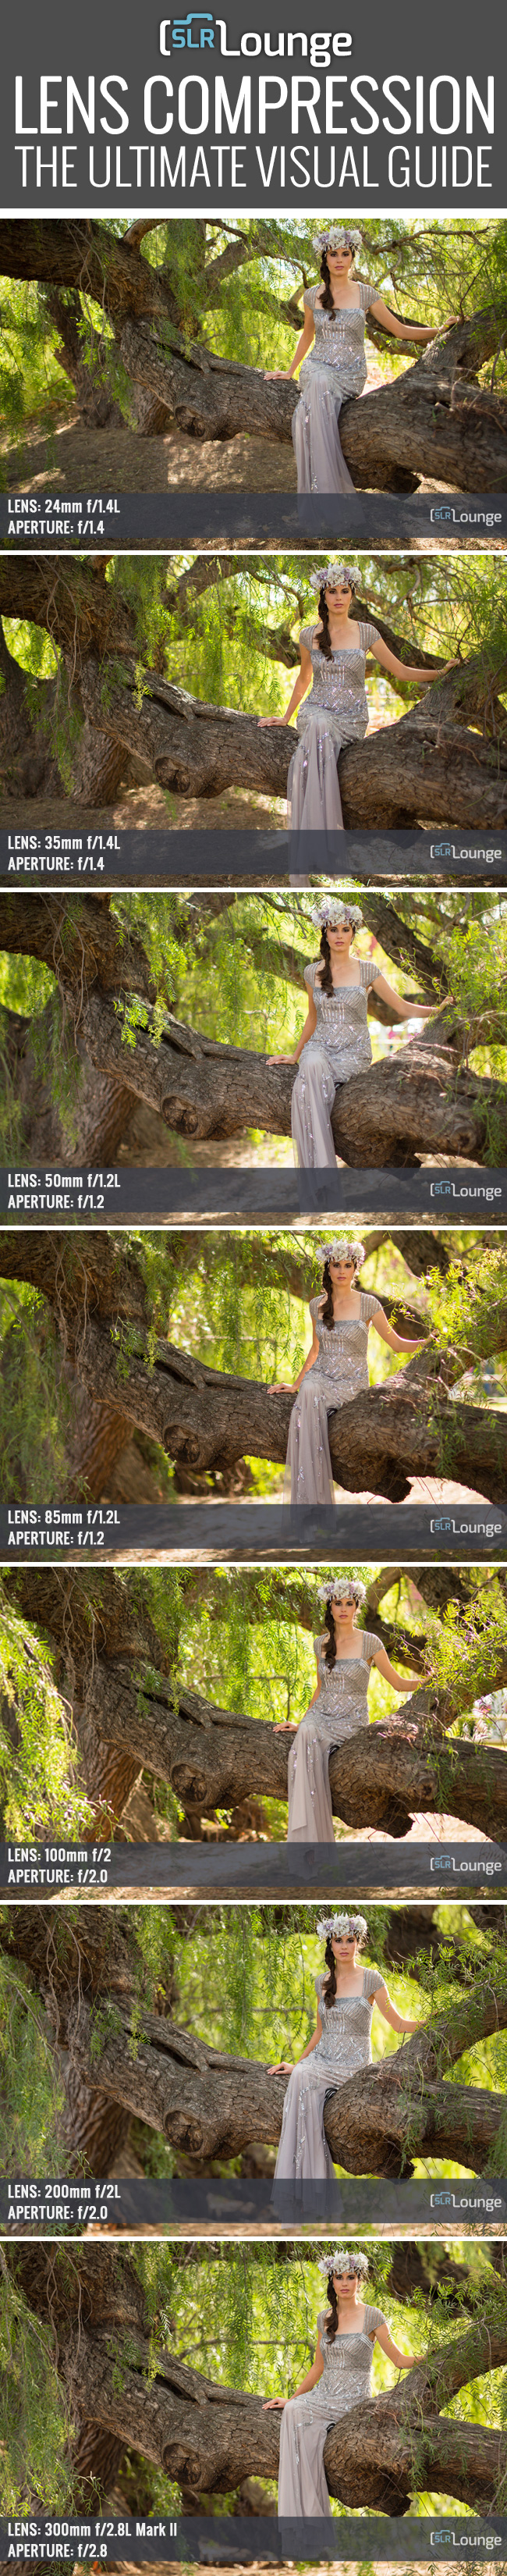 SLR Lounge Lens Compression Visual Guide